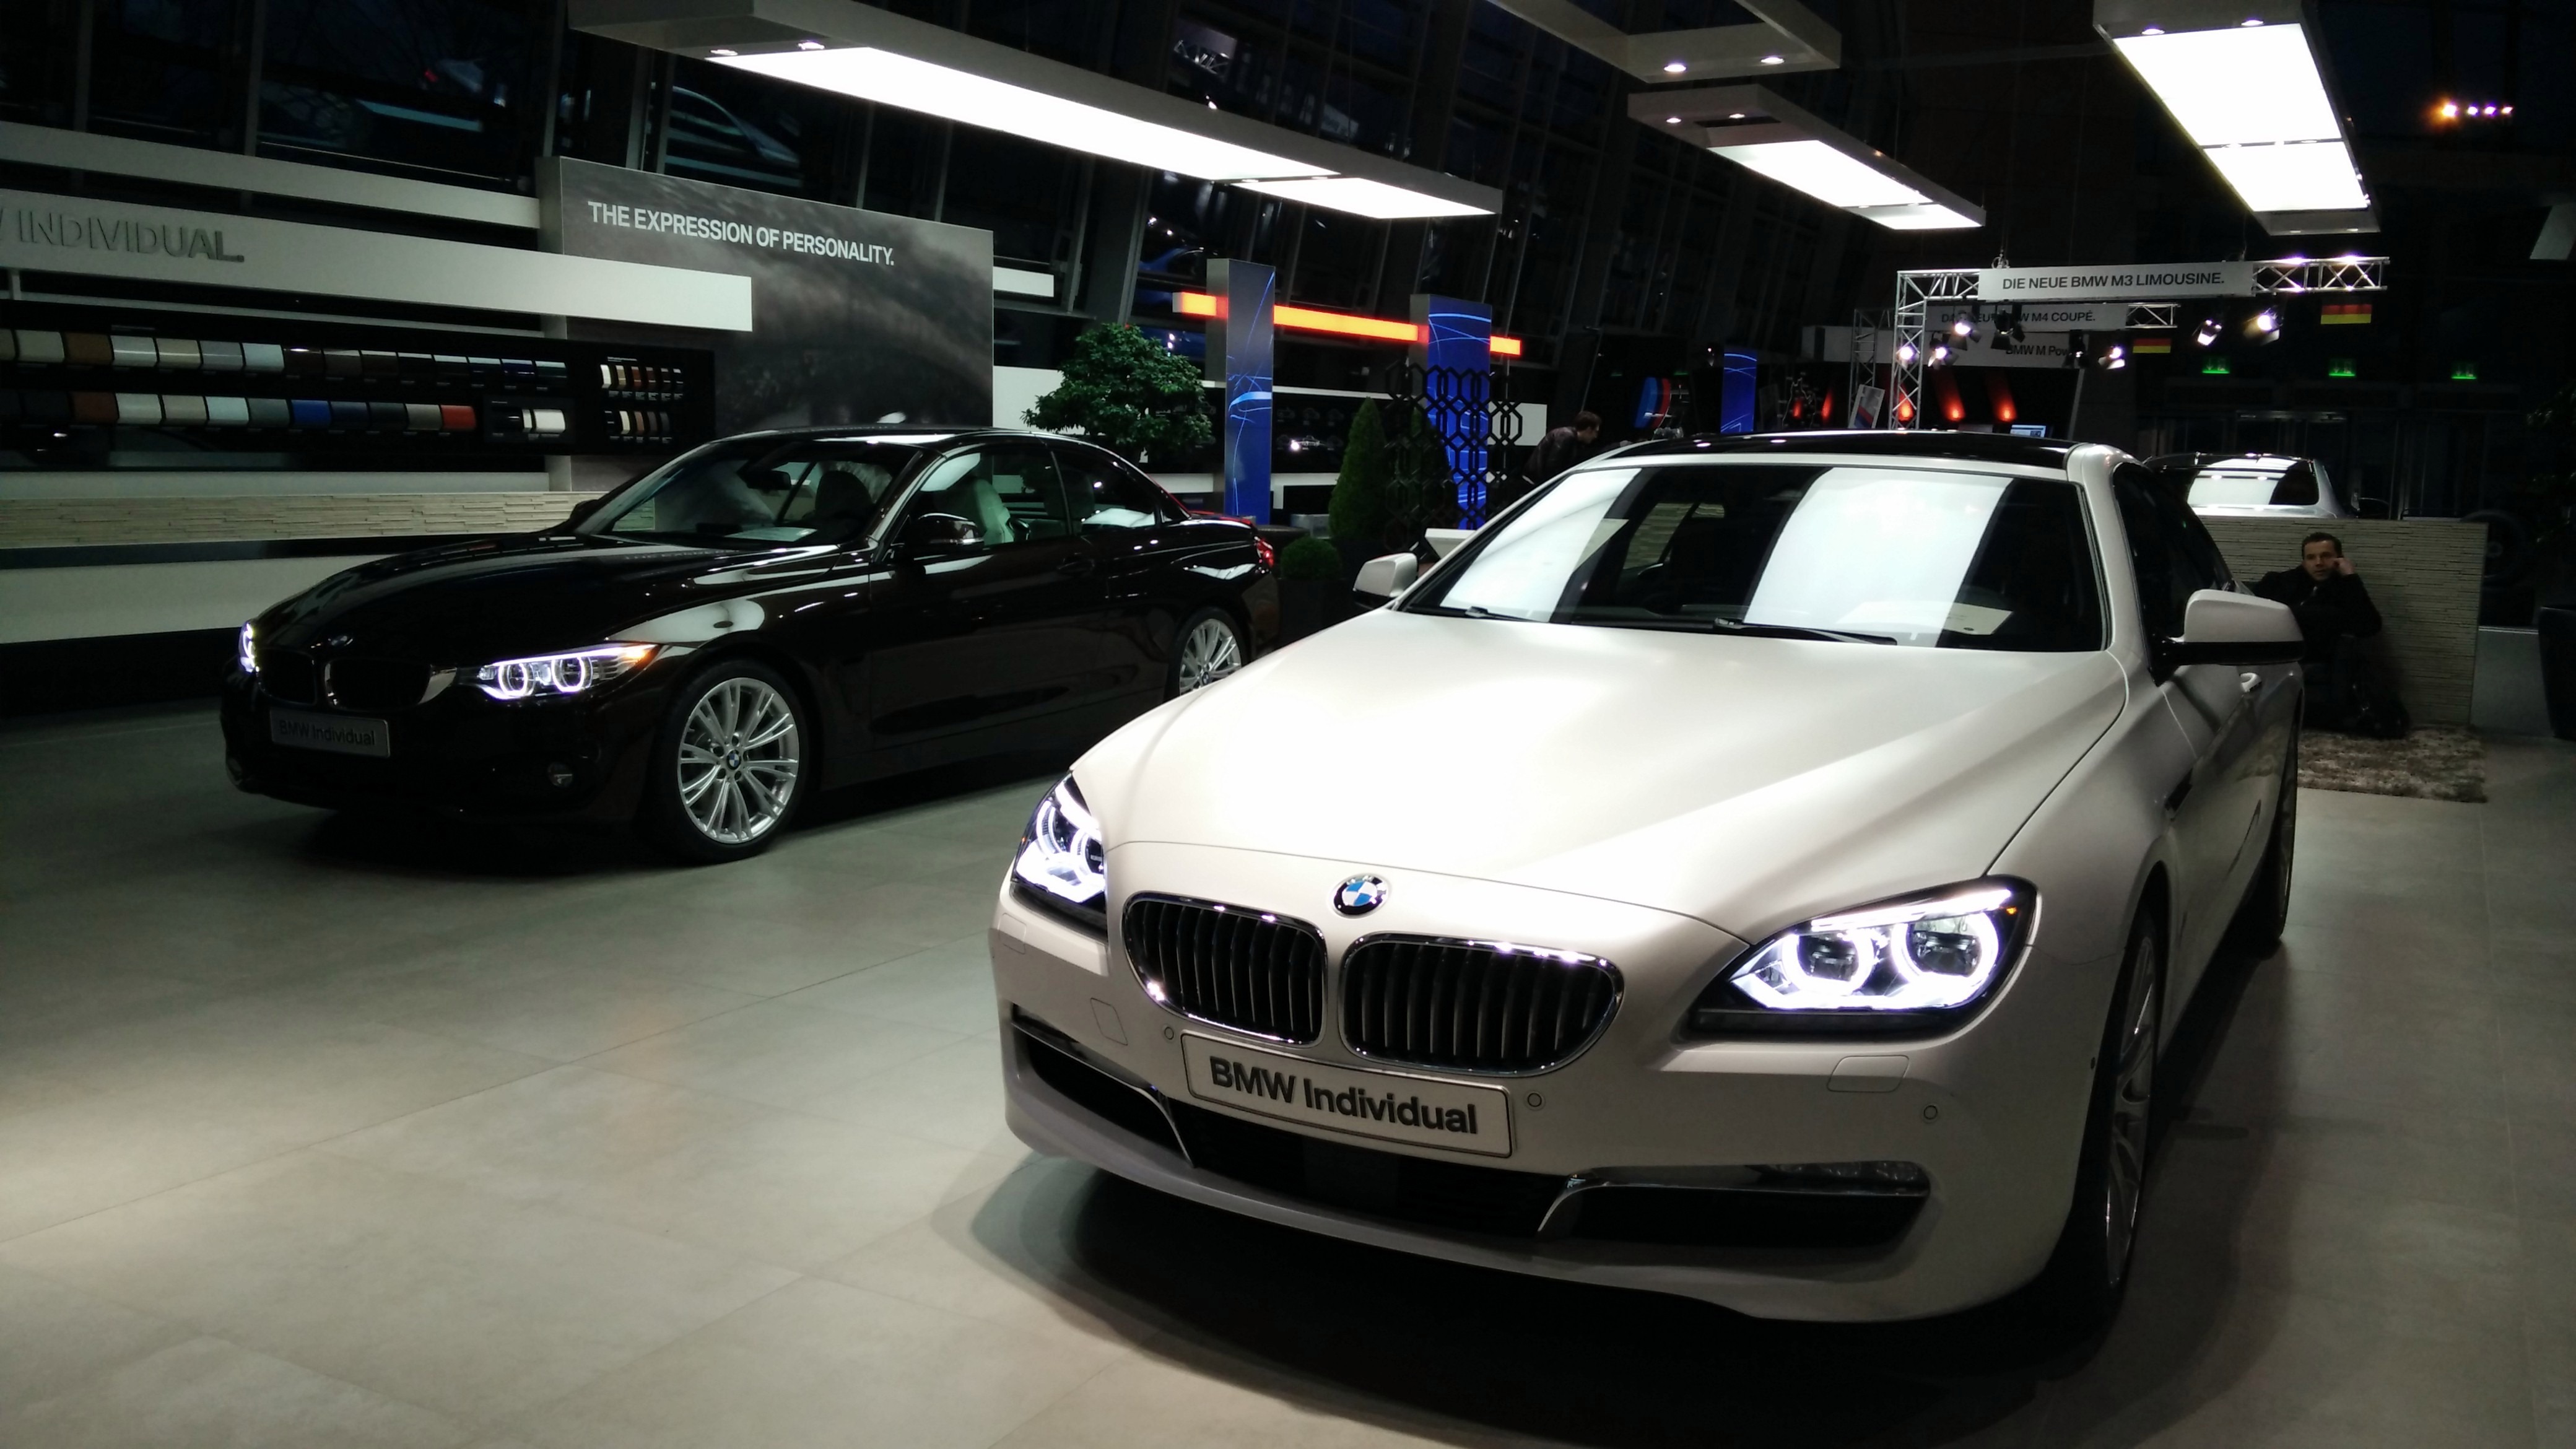 BMW World Munich Germany Visions of Travel